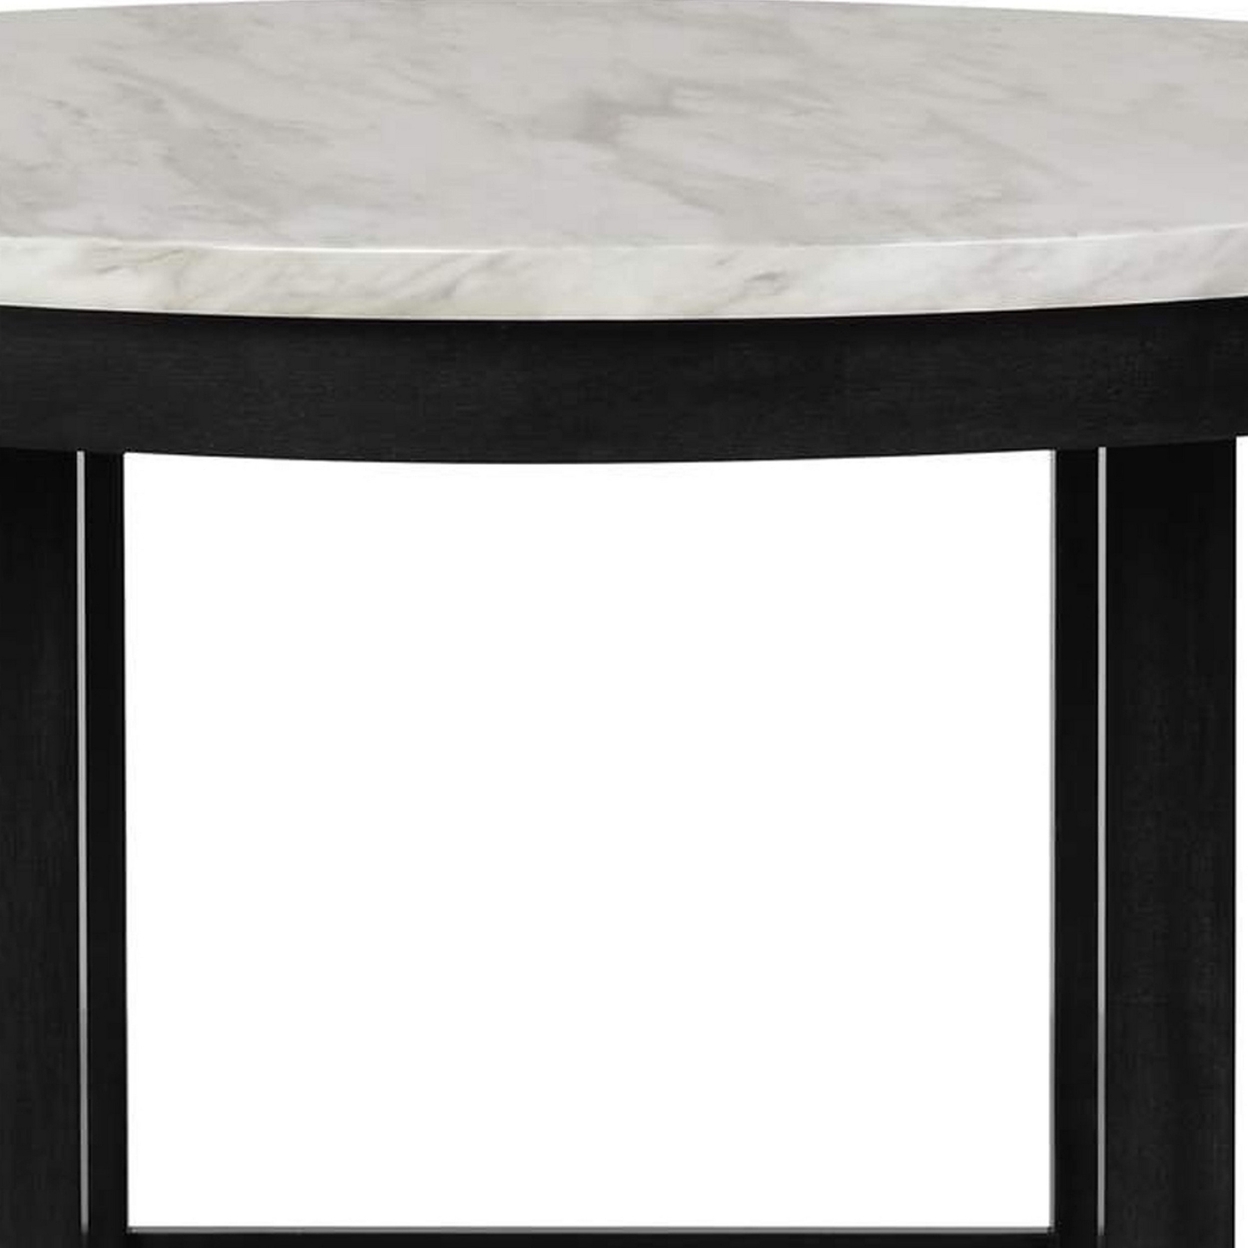 Jordan 42 Inch Round Counter Height Table, Glass Top, Wood, White, Black -Saltoro Sherpi